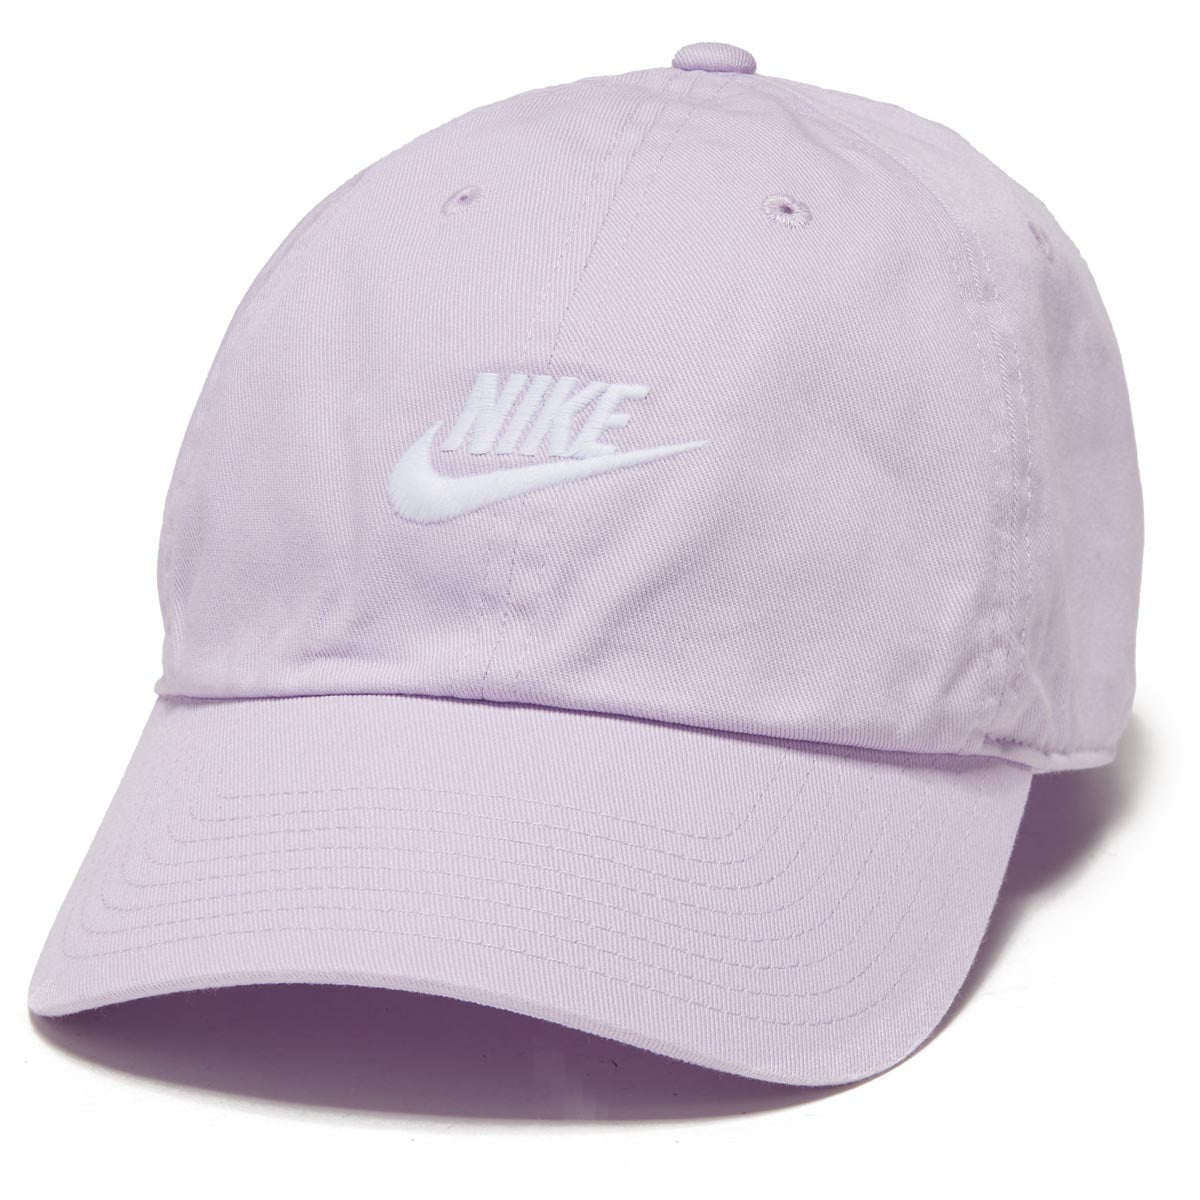 Nike SB Futbol Club Hat - Violet Mist/White image 1